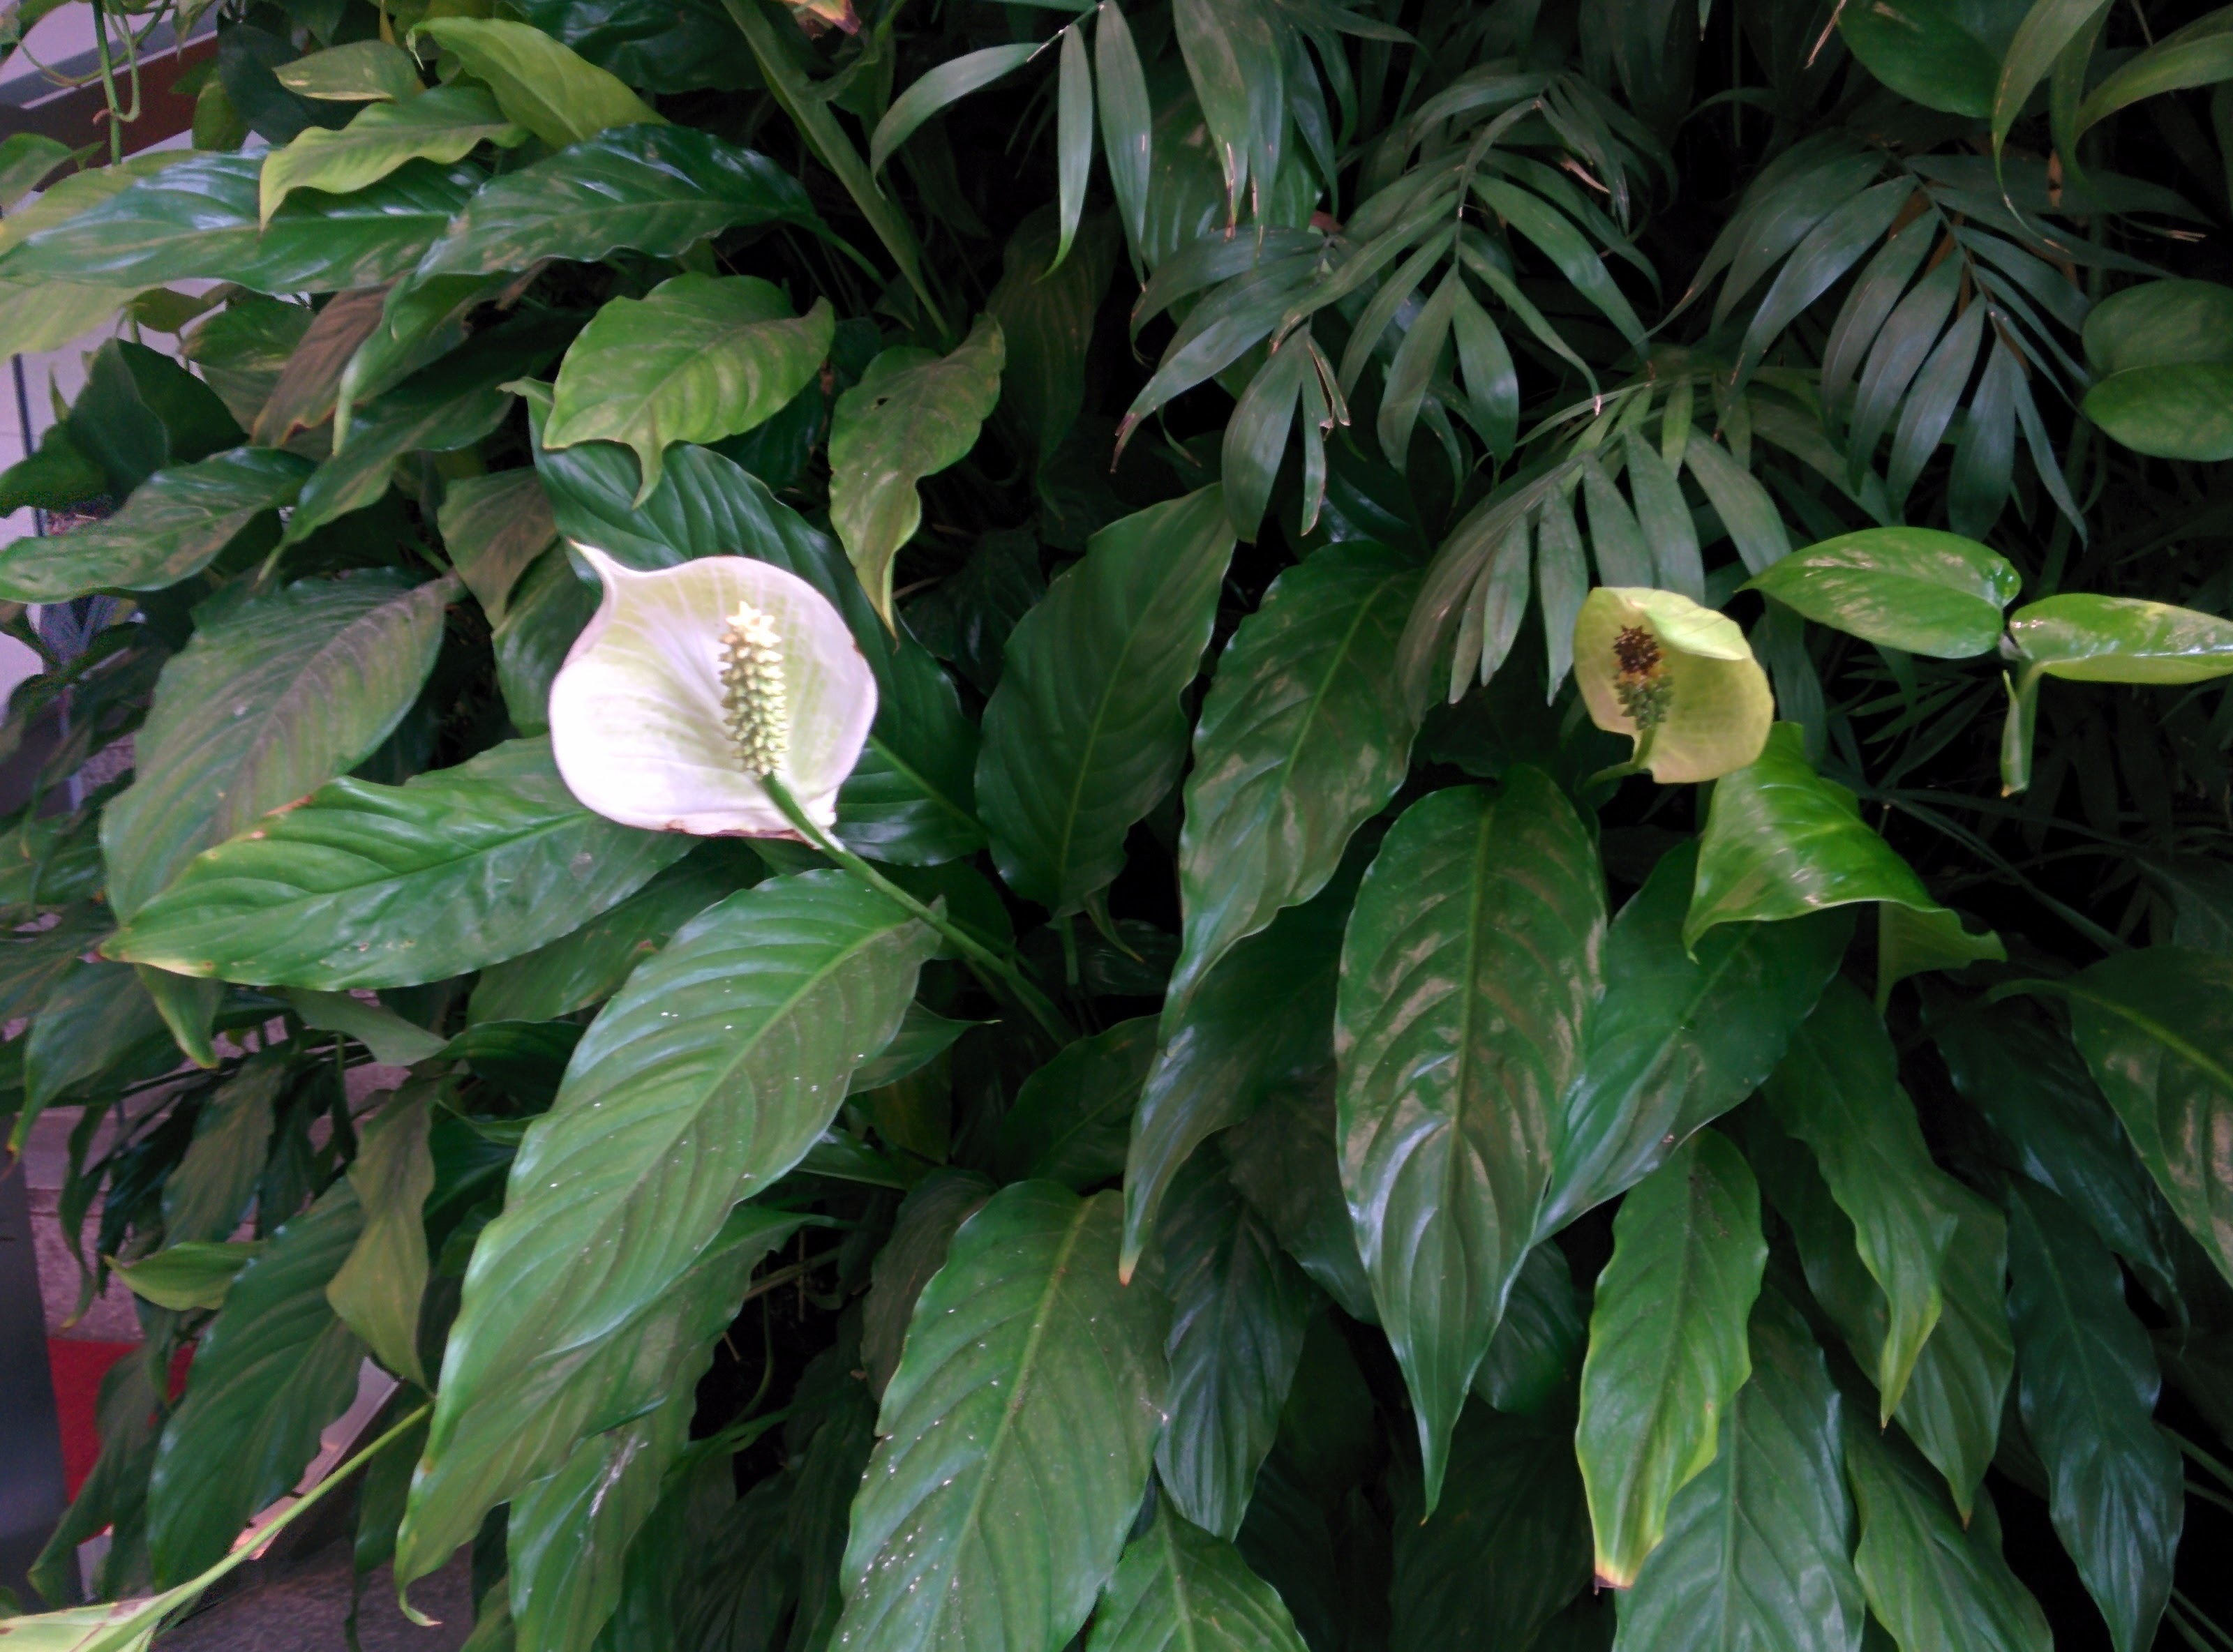 IMG_20151110_090123.jpg 실내에서 자라는 식물. 스파티필럼(Spathiphyllum)